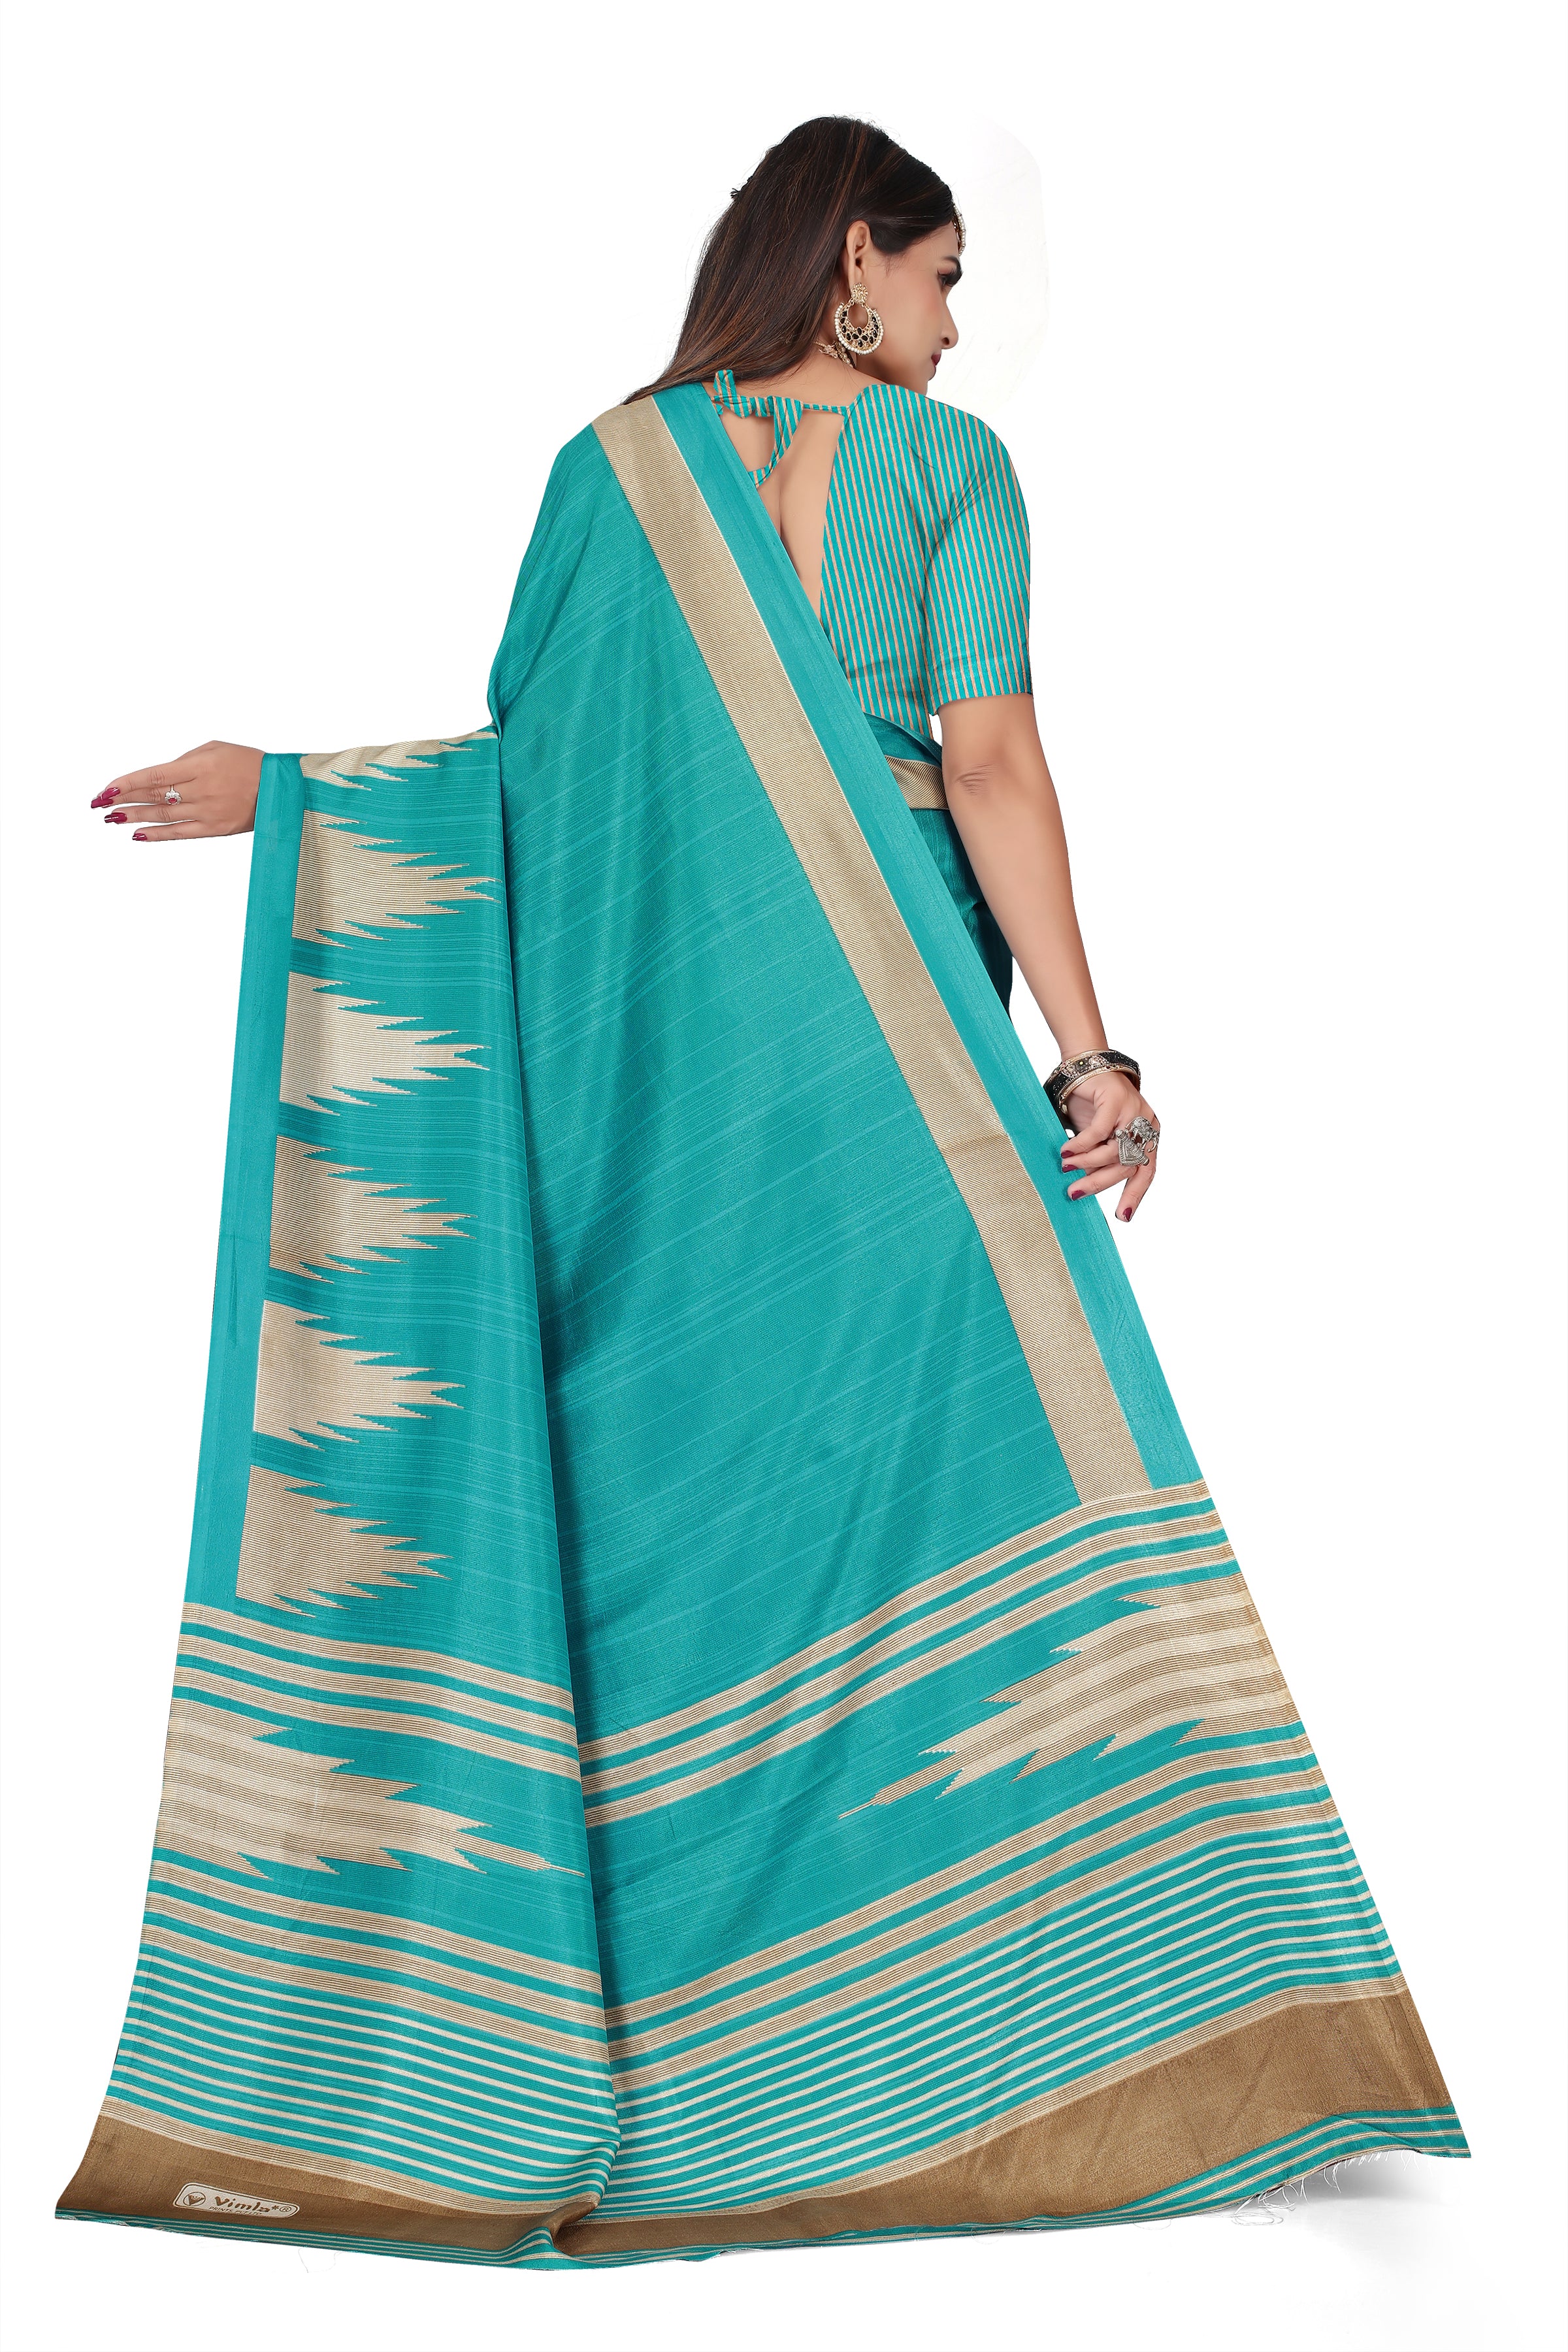 Vimla Prints Women's Turquoise Malgudi Art Silk Uniform Saree with Blouse Piece (2446_24)